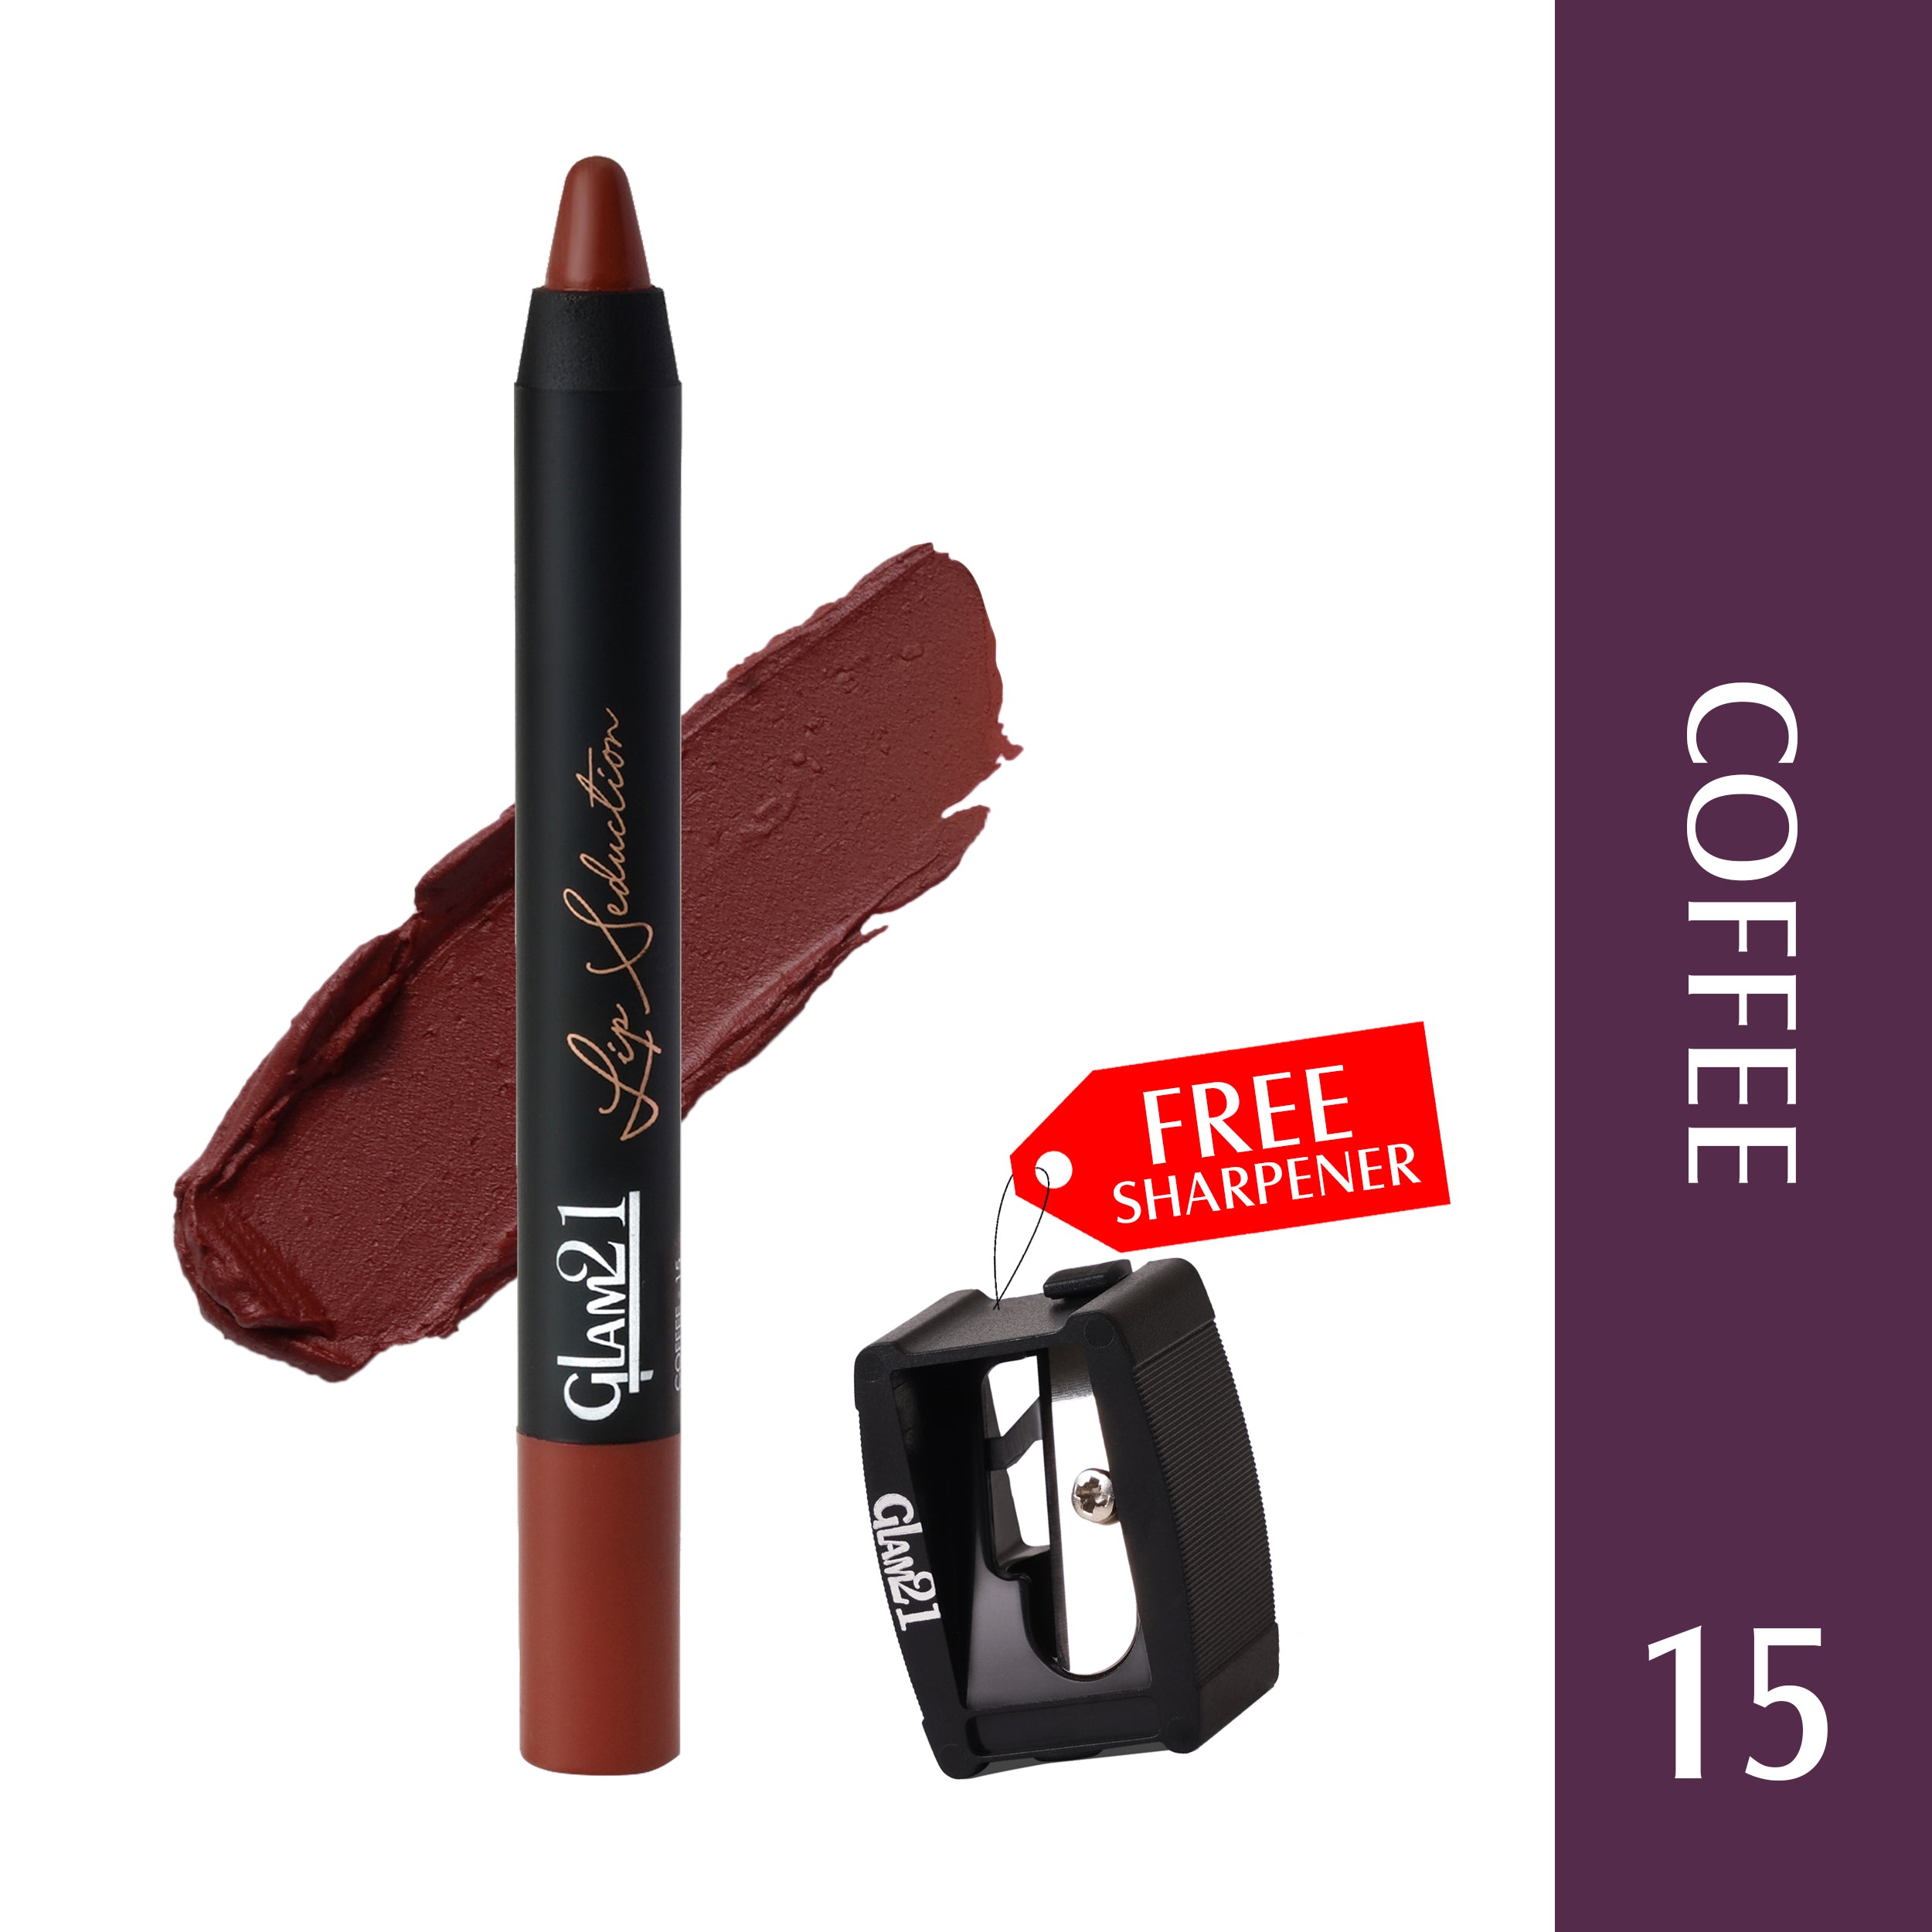 Glam21 Lip Seduction Non-Transfer Crayon Lipstick | Longlasting Creamy Matte Formula (Coffee-15, 2.8 g)